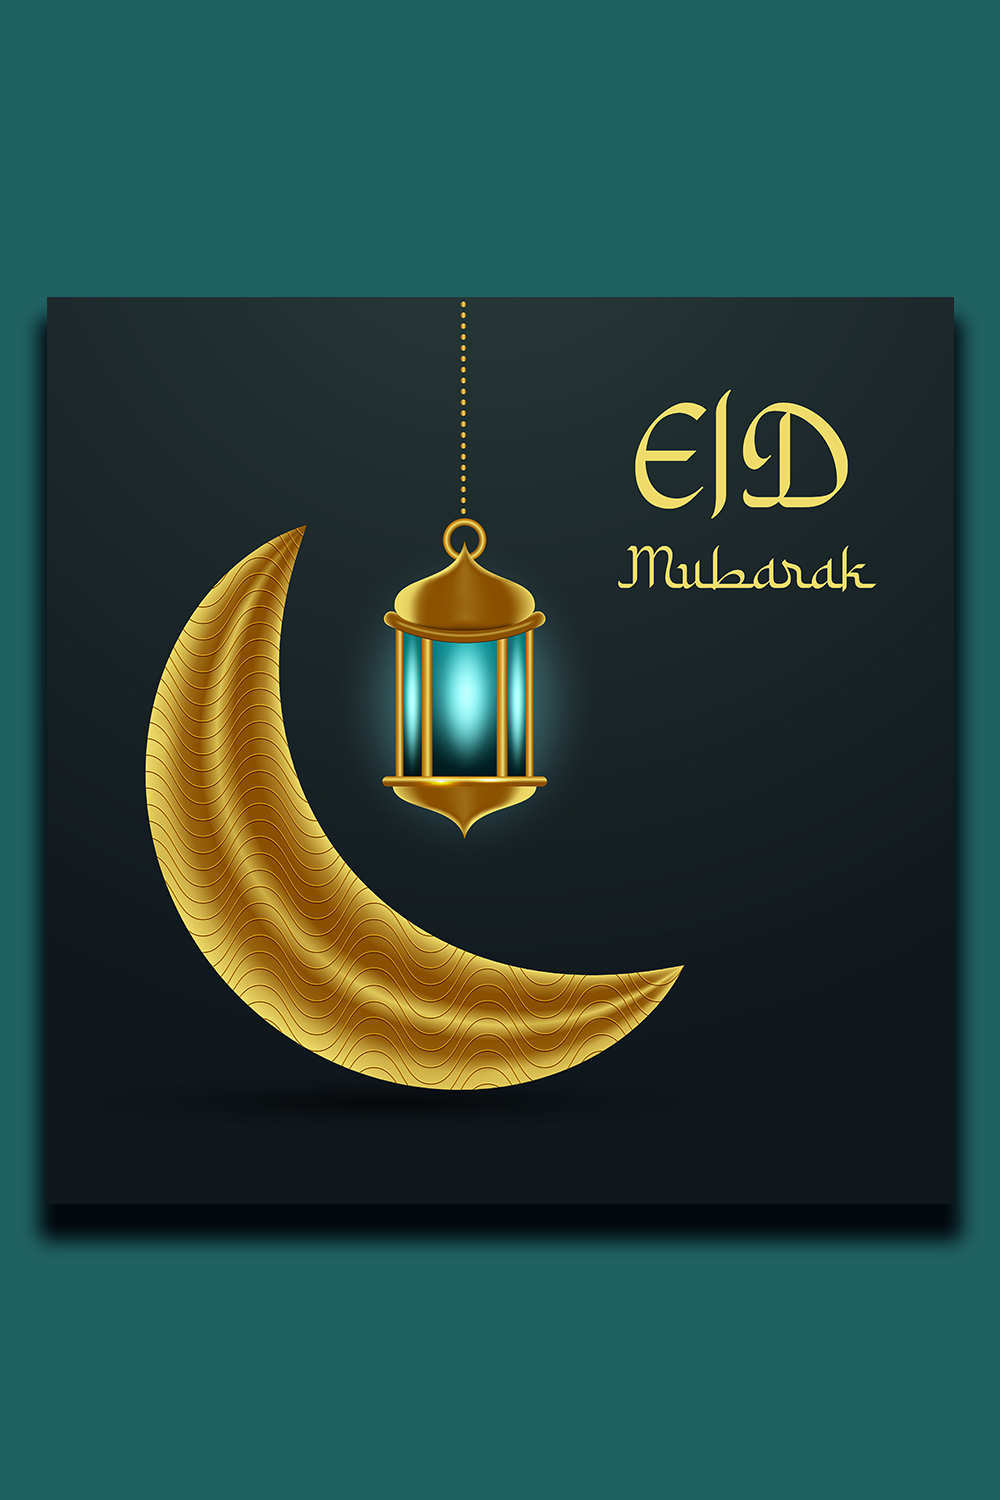 3D Eid Mubarak Social Media Design pinterest preview image.